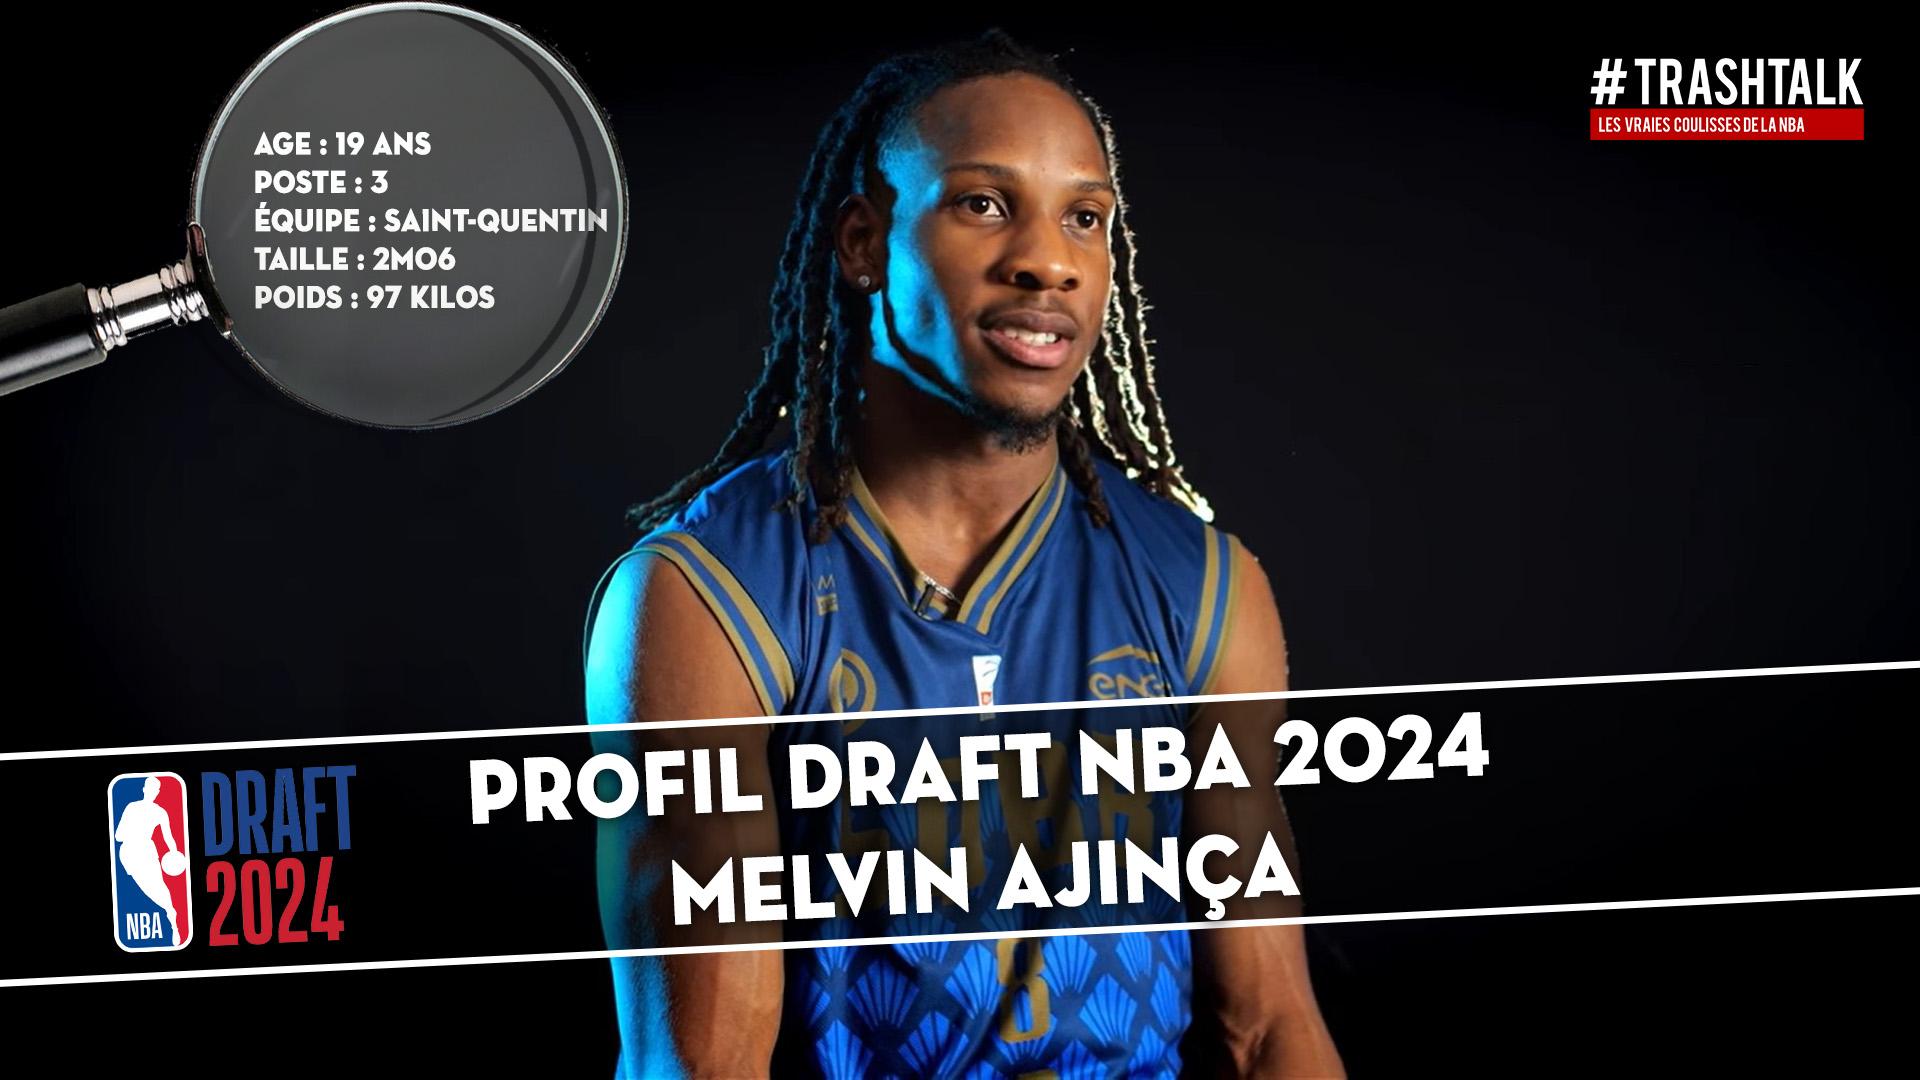 Profil Draft Melvin Ajinça 4 juin 2024